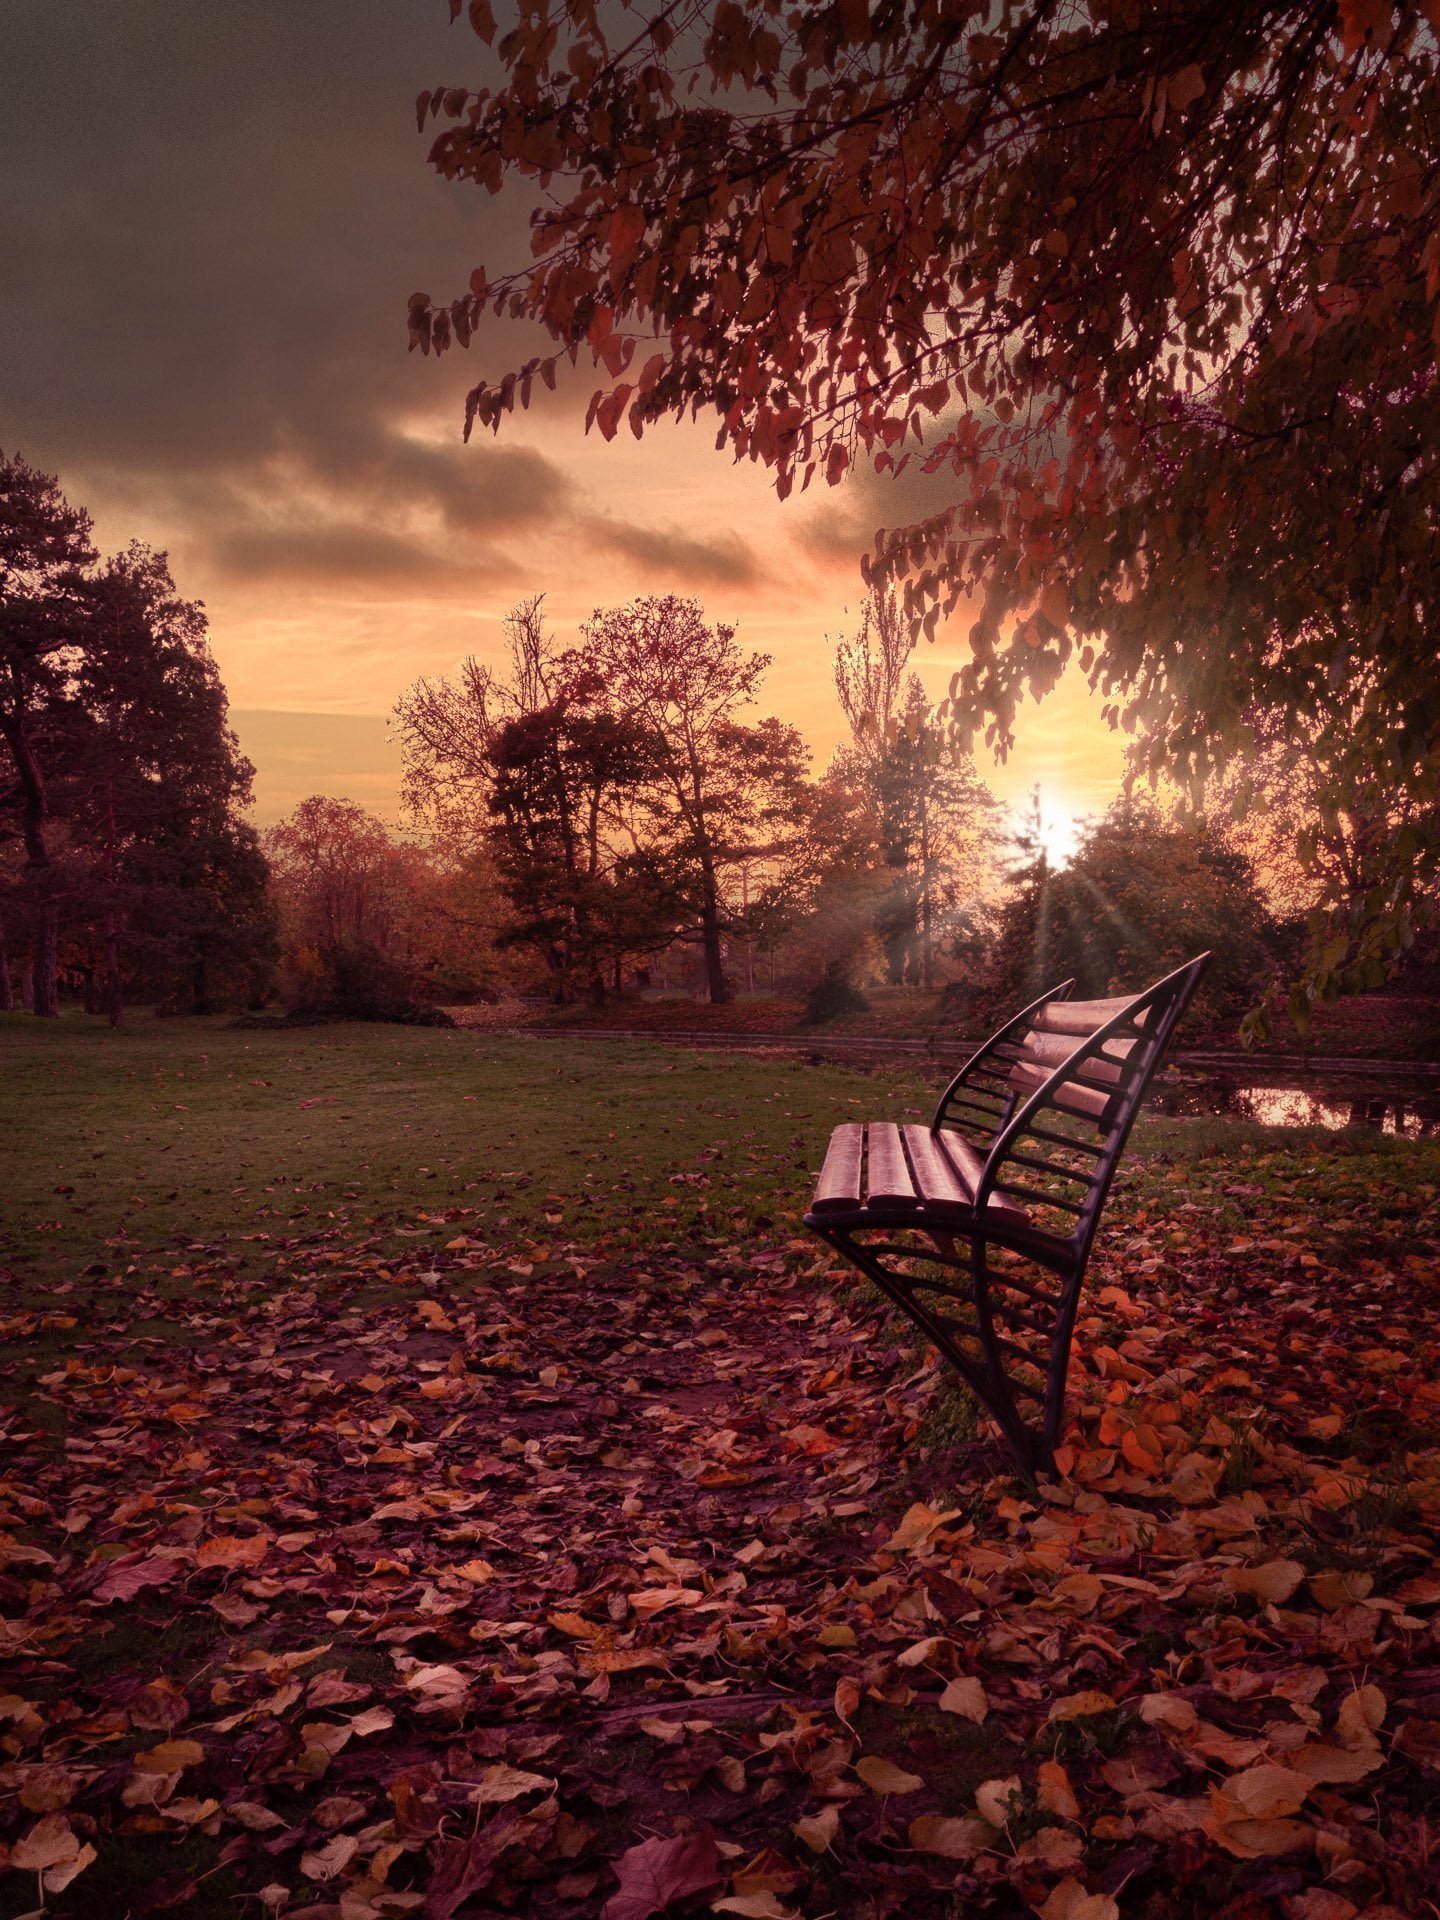 Autumn sunset near the bench in Le Vesinet